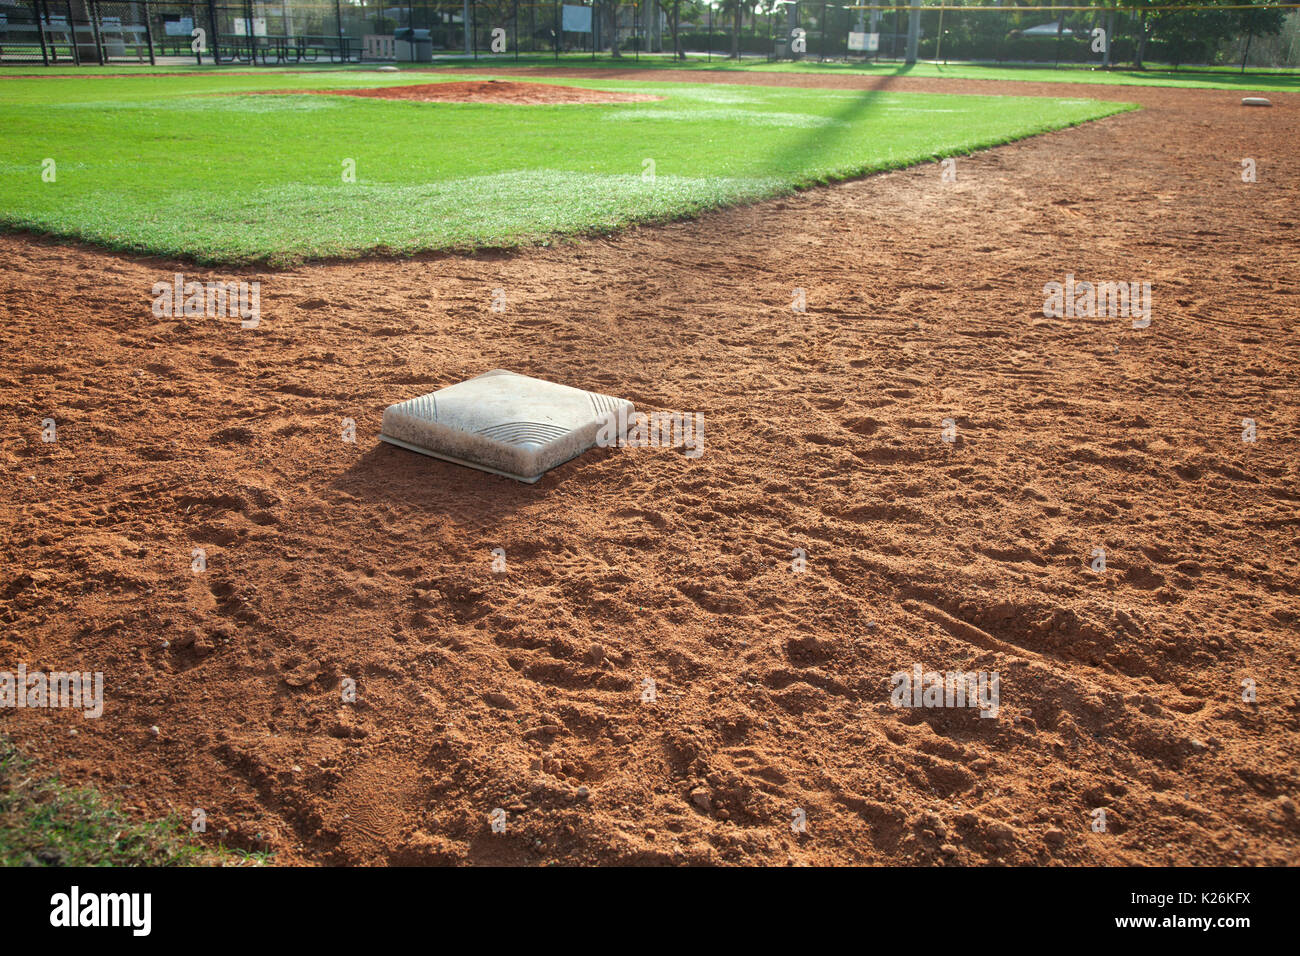 Un campo de béisbol juvenil infield con primera base en primer plano Foto de stock